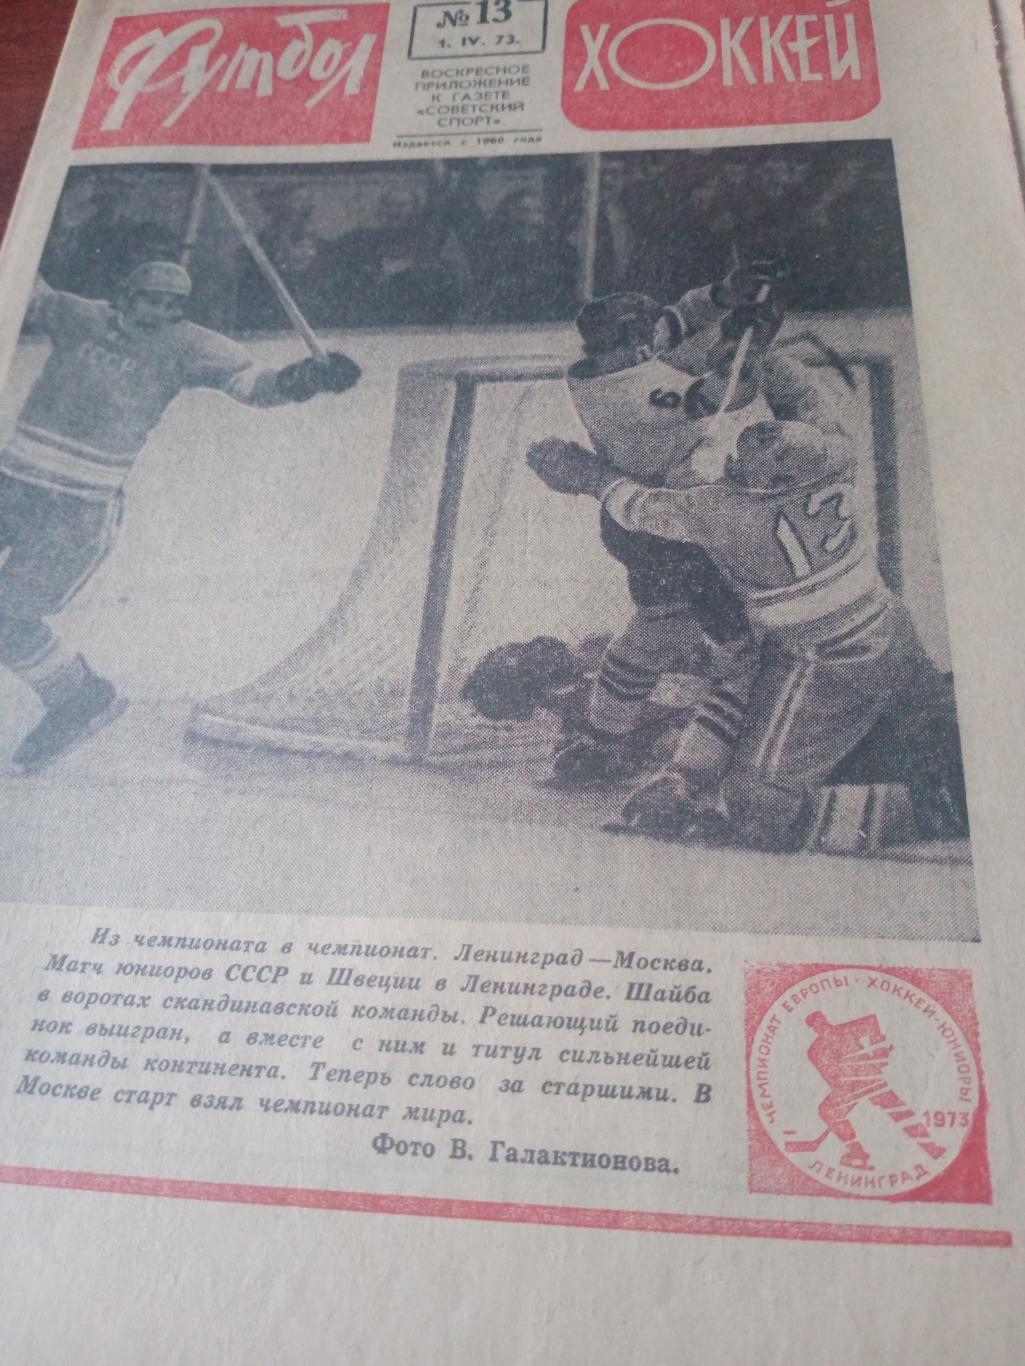 Футбол - Хоккей. 1973 год, №13.